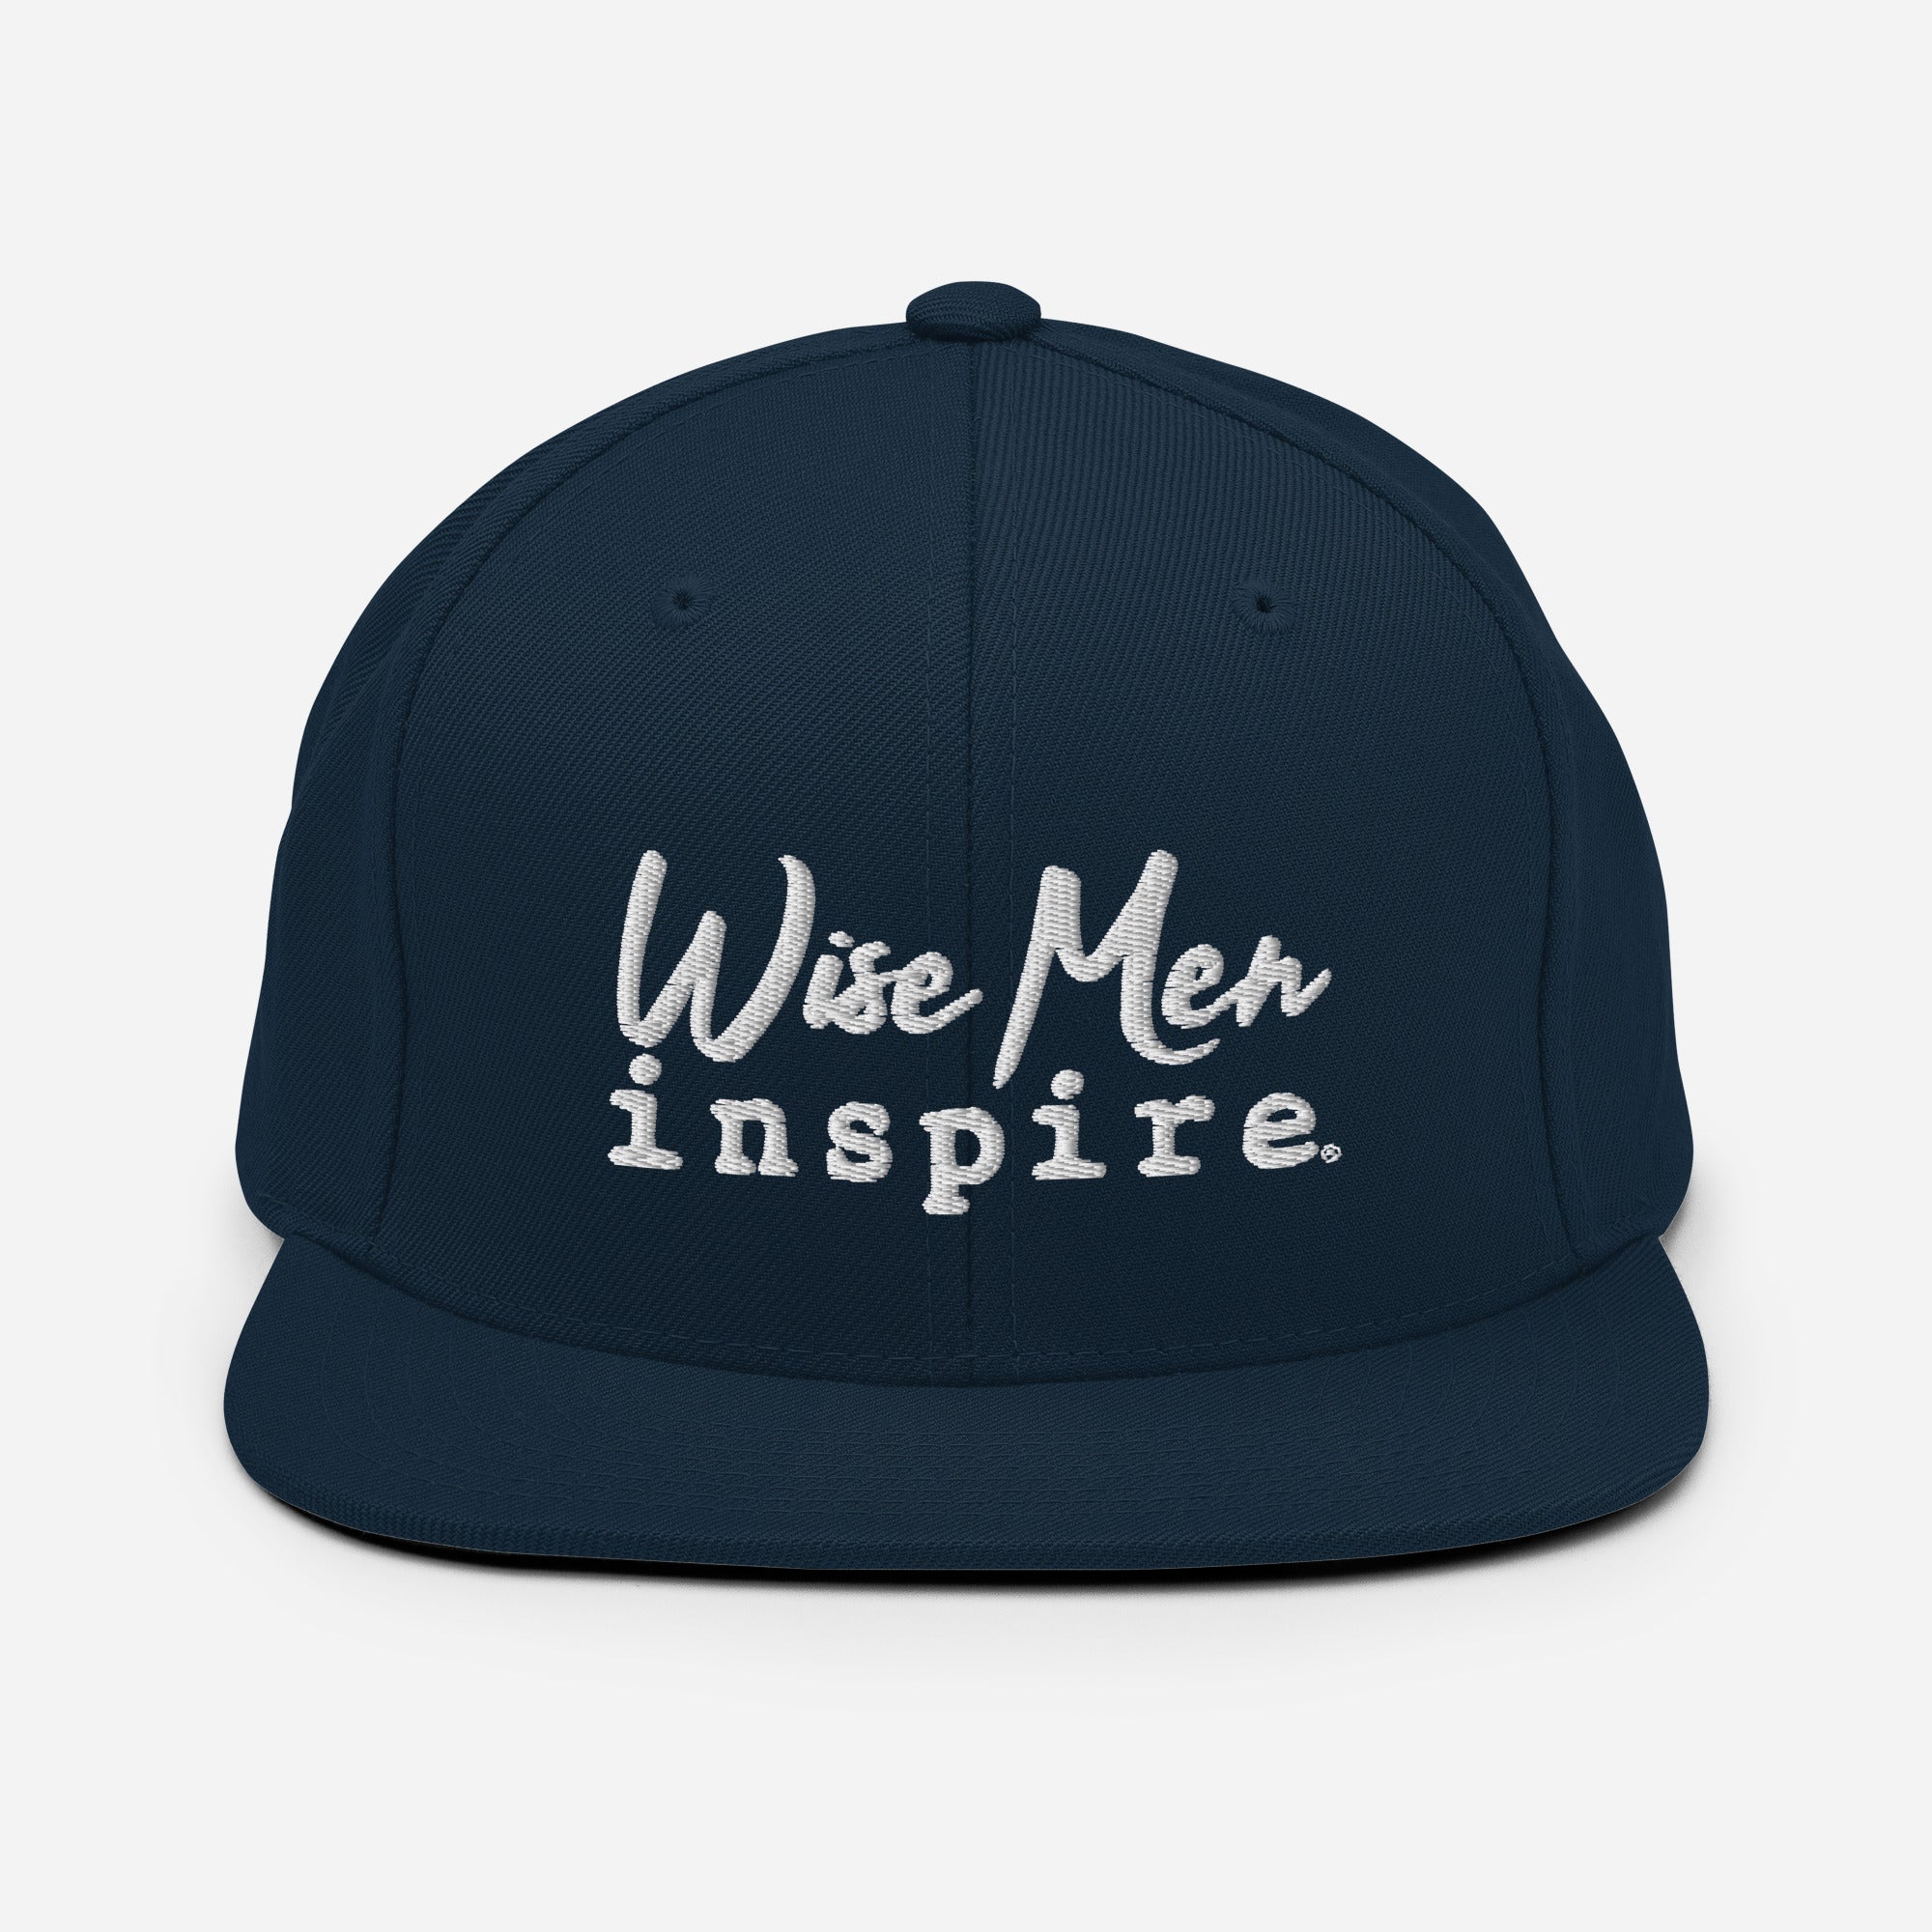 inspire Wise Men Snapback Hat